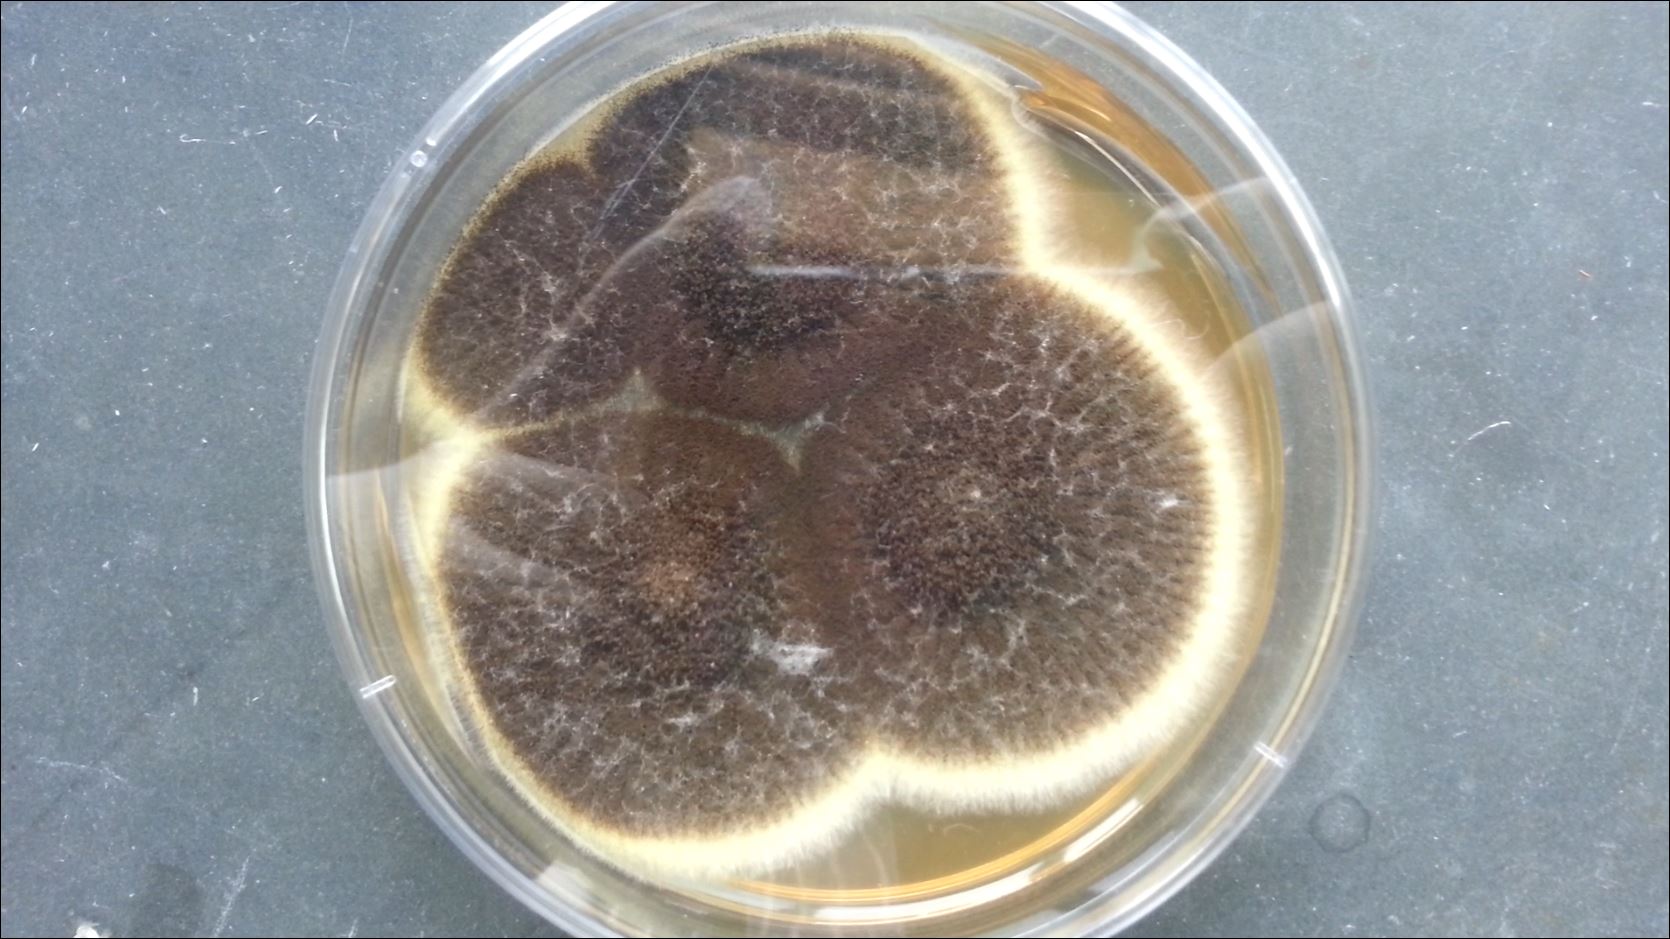 Aspergillus niger Colony Morphology on Sabouraud Dextrose Agar (SDA) after 3 days of incubation